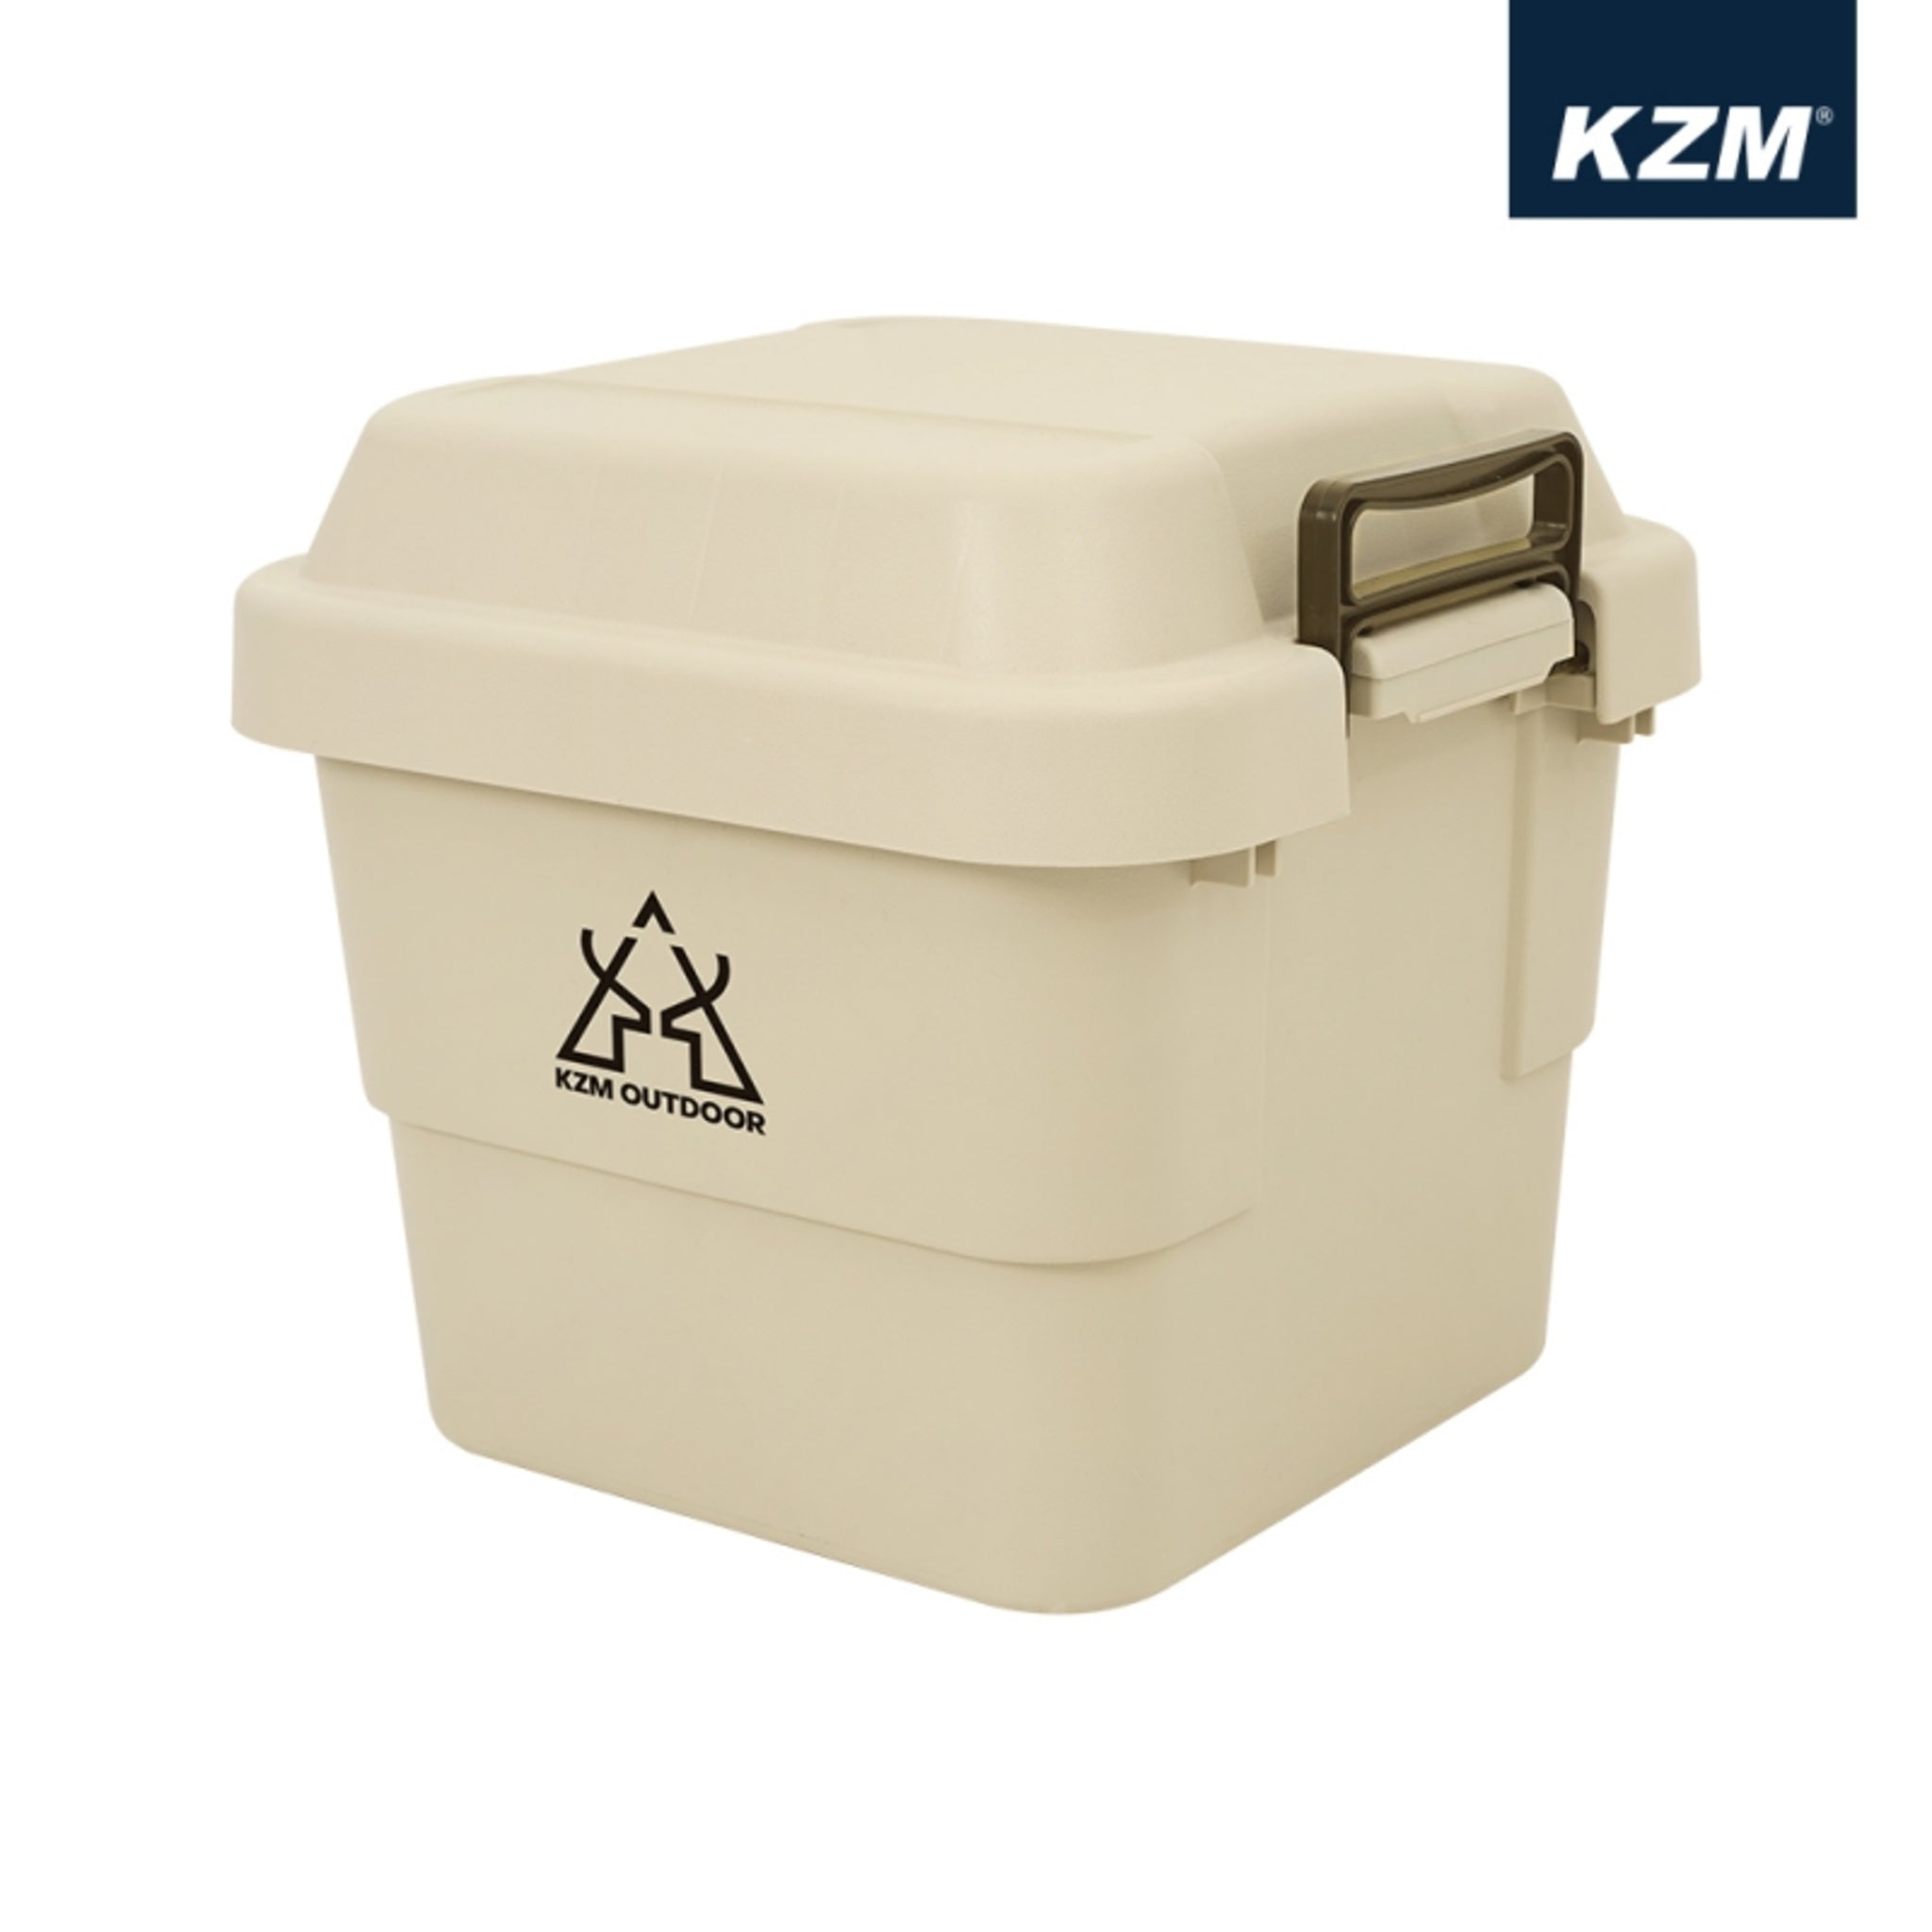 KAZMI KZM 風格收納箱30L 卡其色 K21T3K06